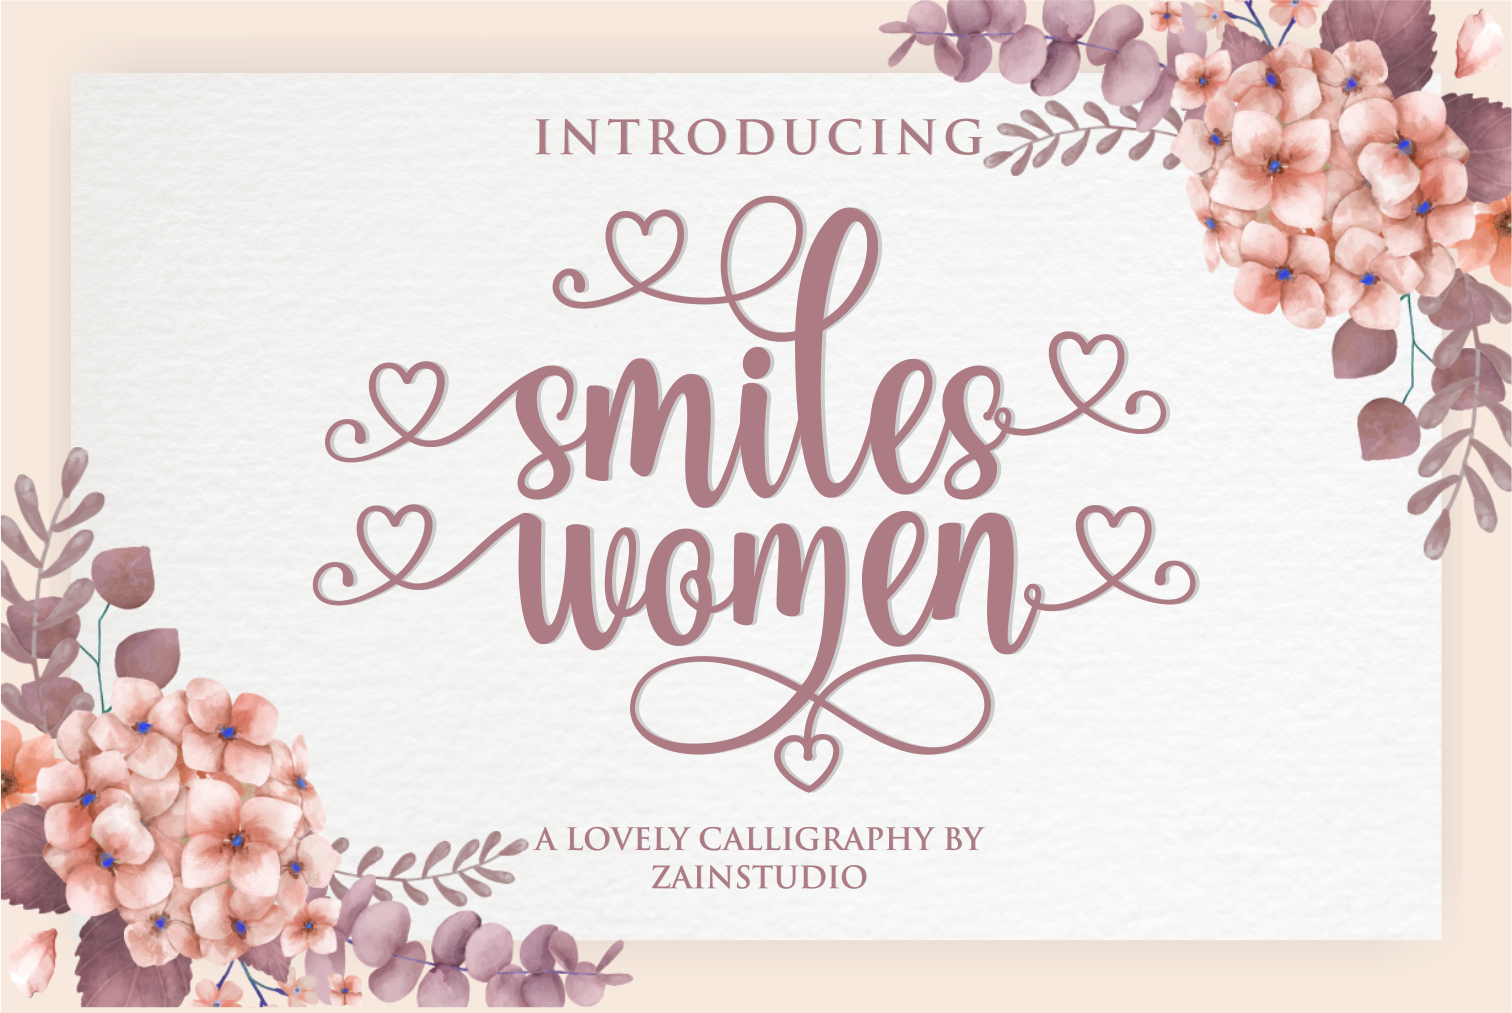 smiles women